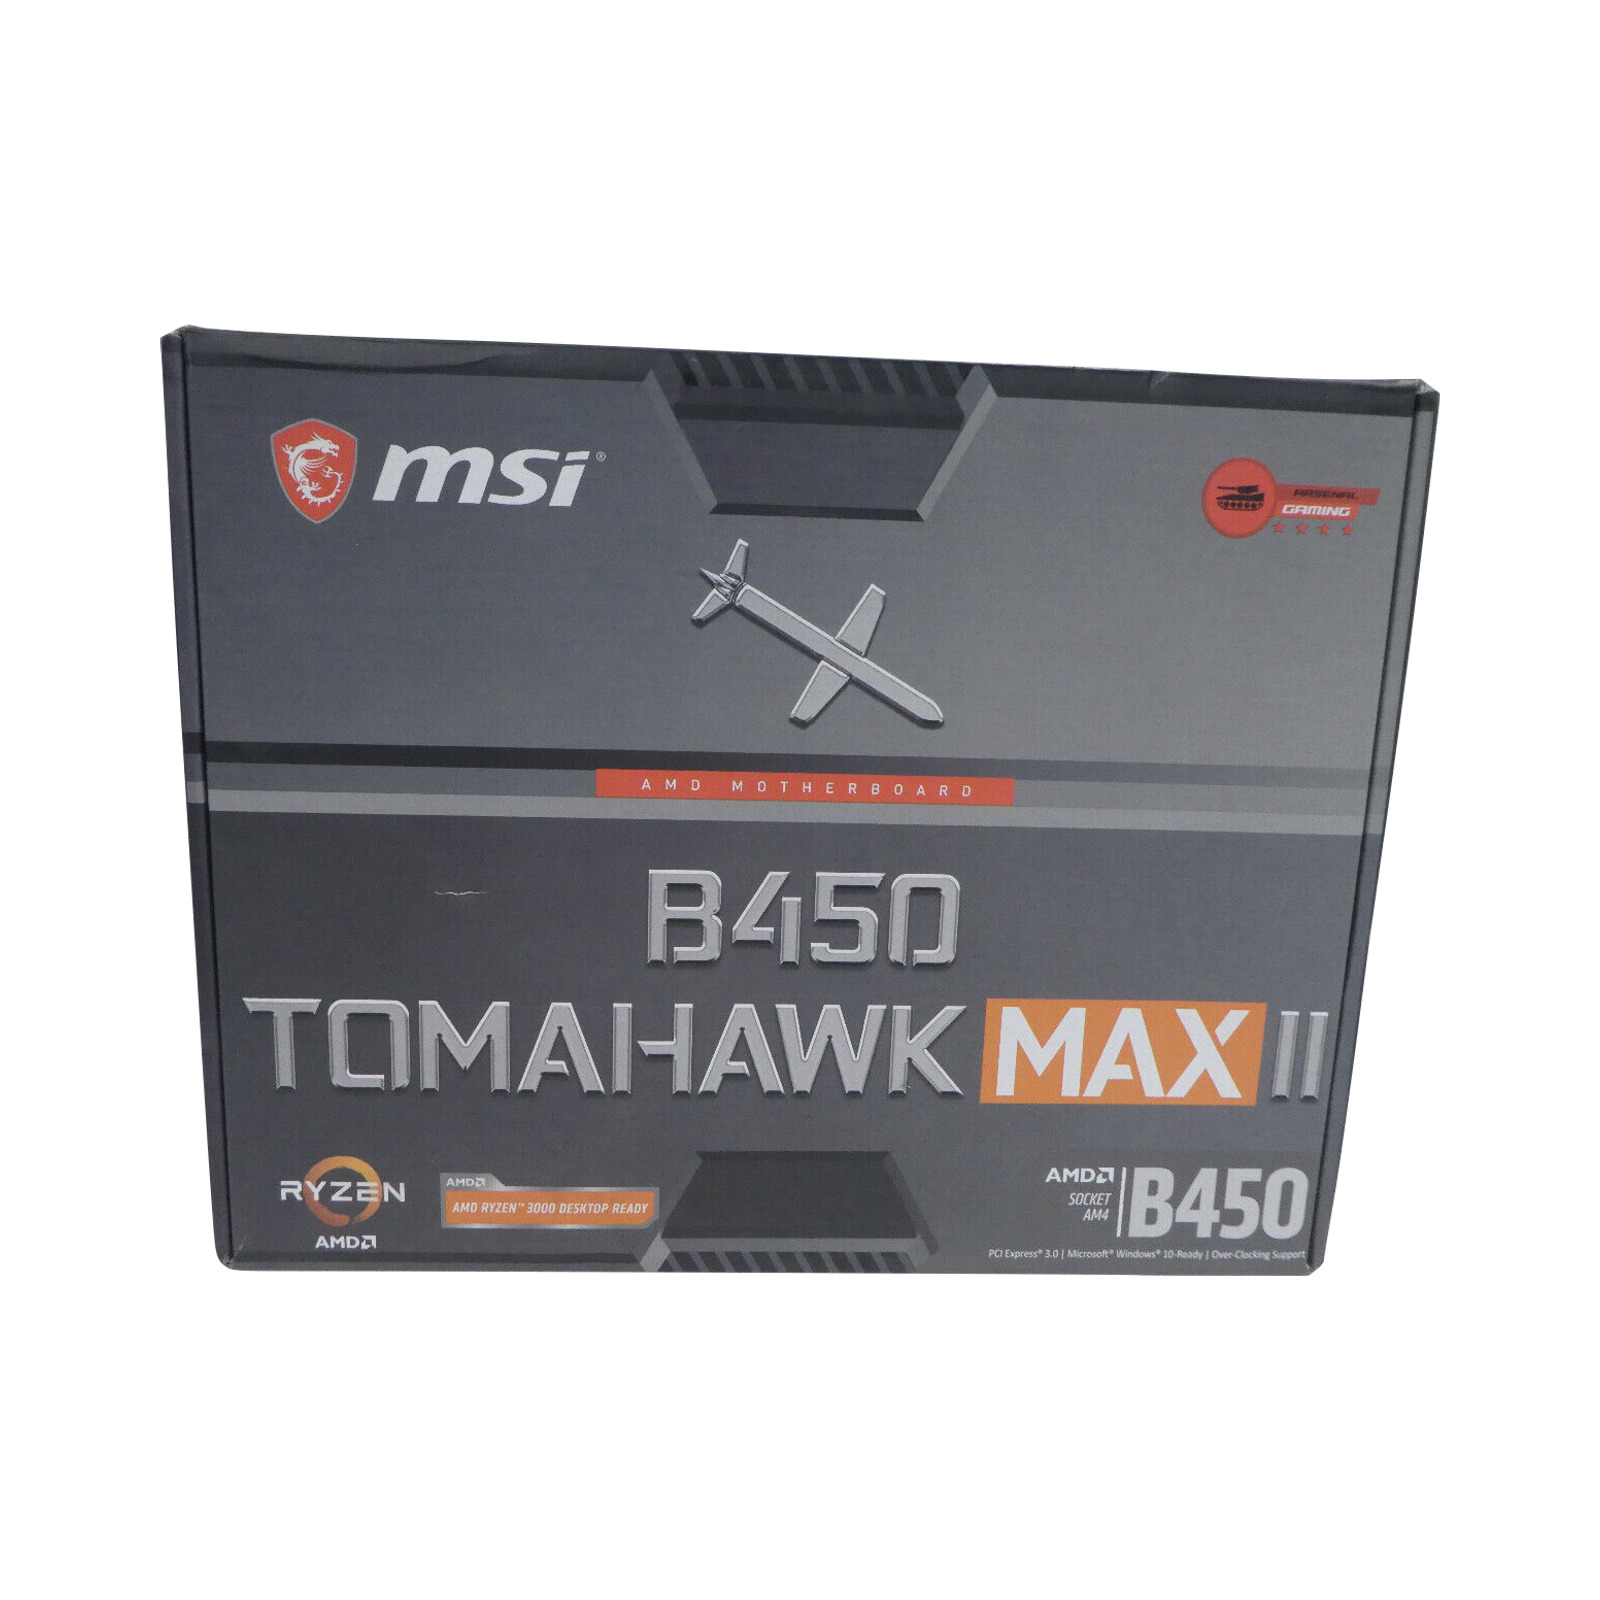 MSI B450 TOMAHAWK AM4 ATX Gaming Motherboard ‎B450 TOMAHAWK MAX II